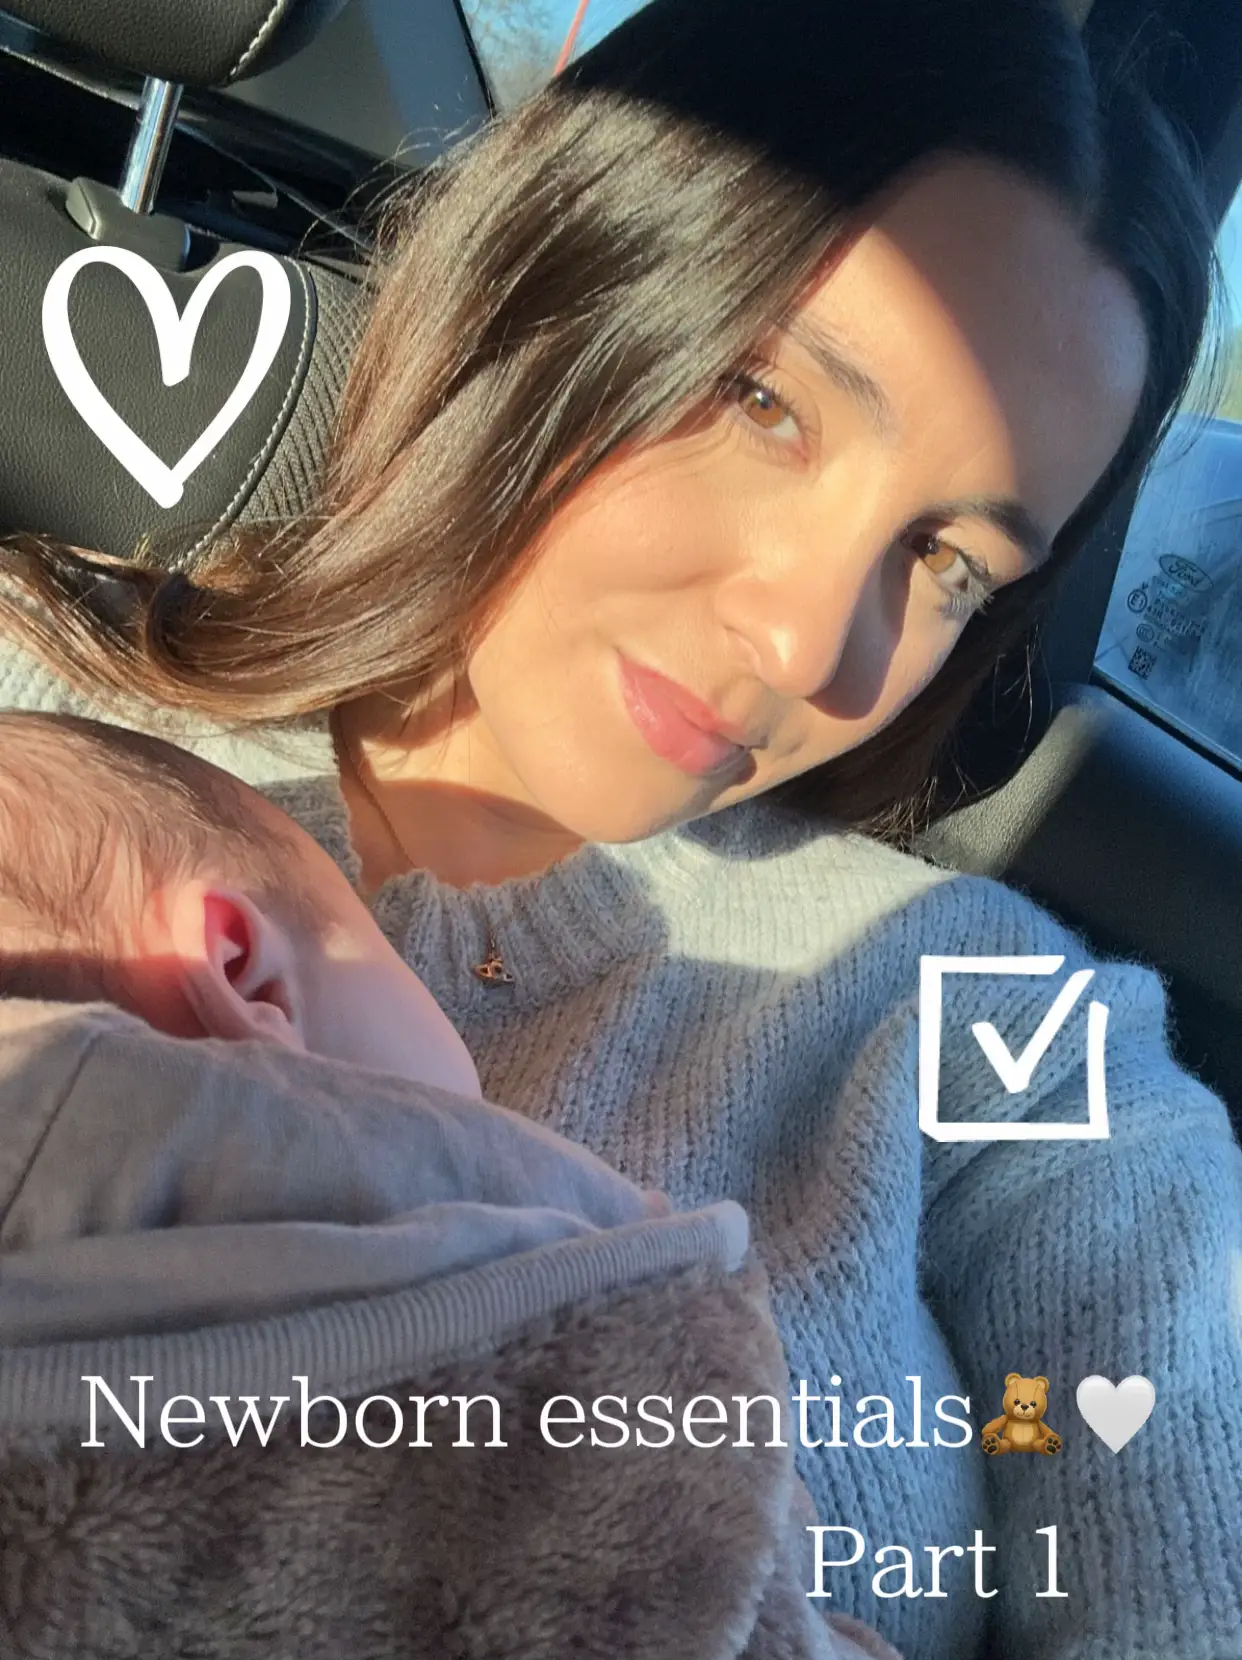 newborn essentials must haves - Lemon8 Search